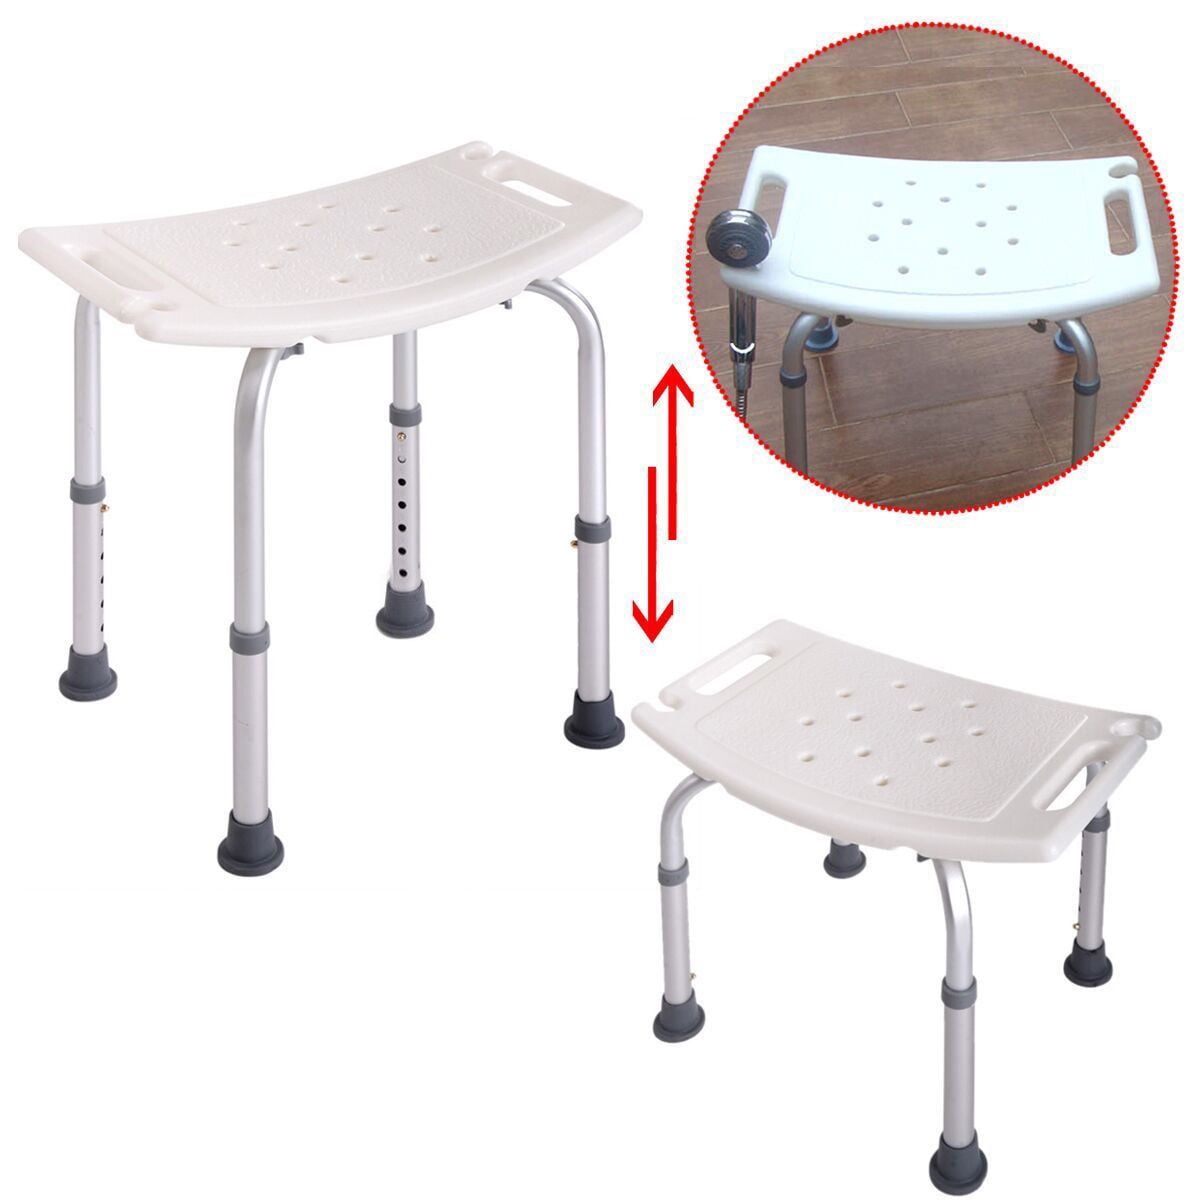 Zimtown Adjustable Height Medical Elderly Bath Shower Chair Bench Stool